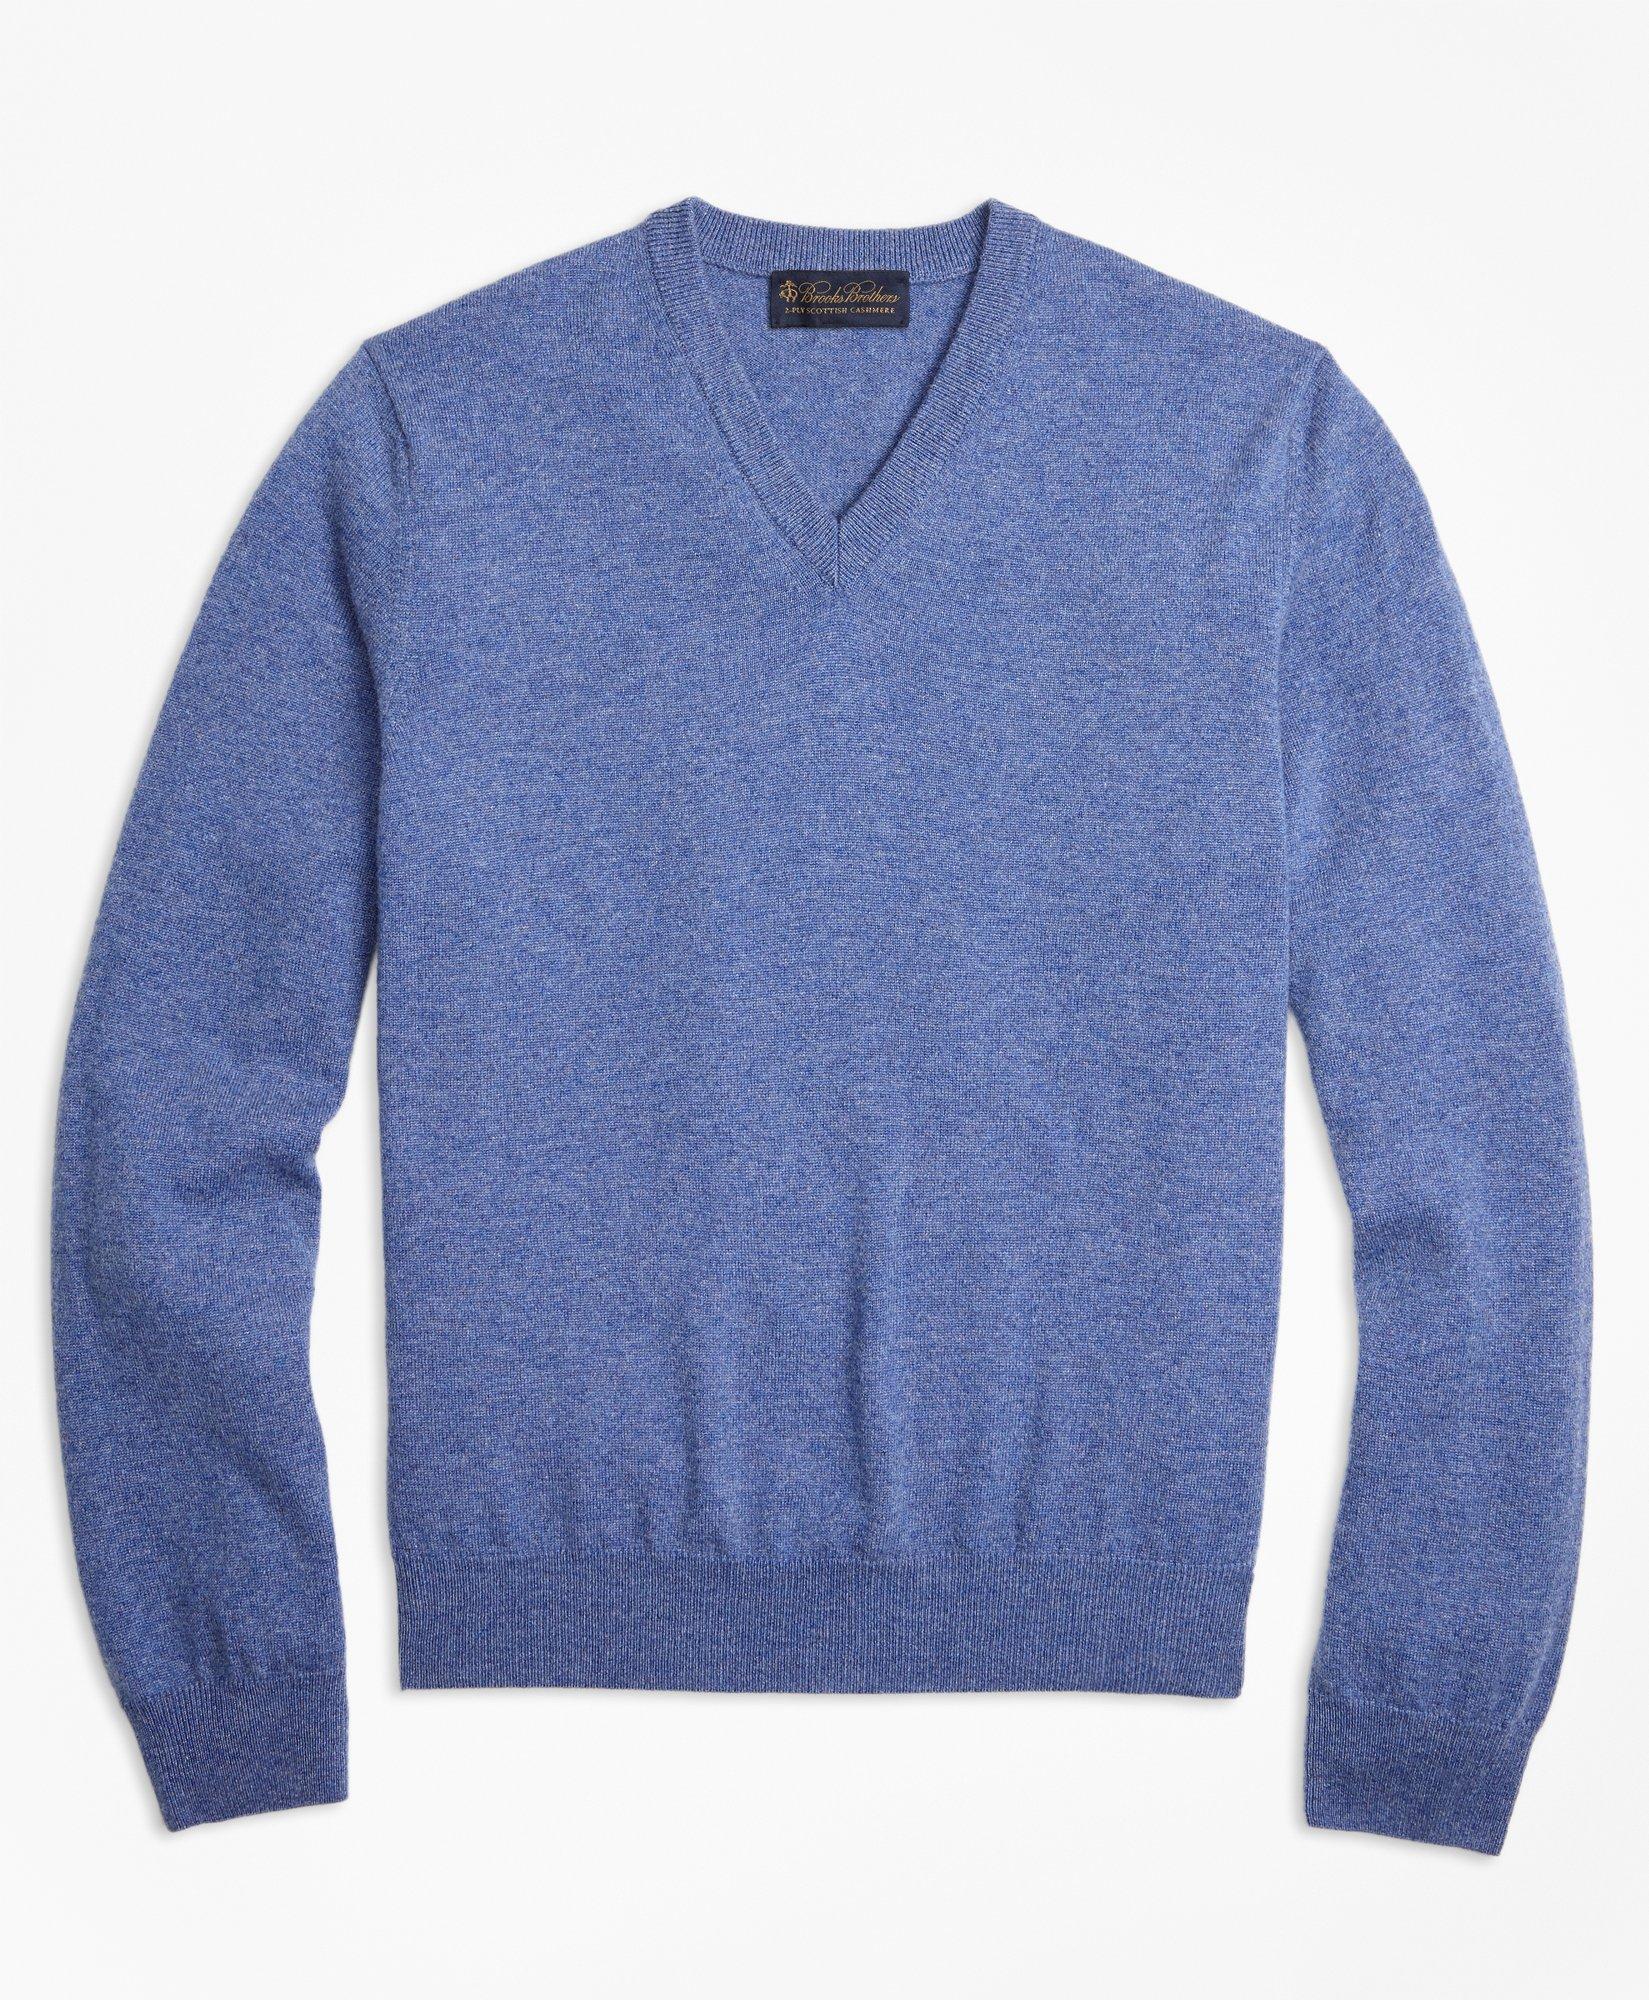 着丈70cmBrooks Brothers Cashmere Sweater XL